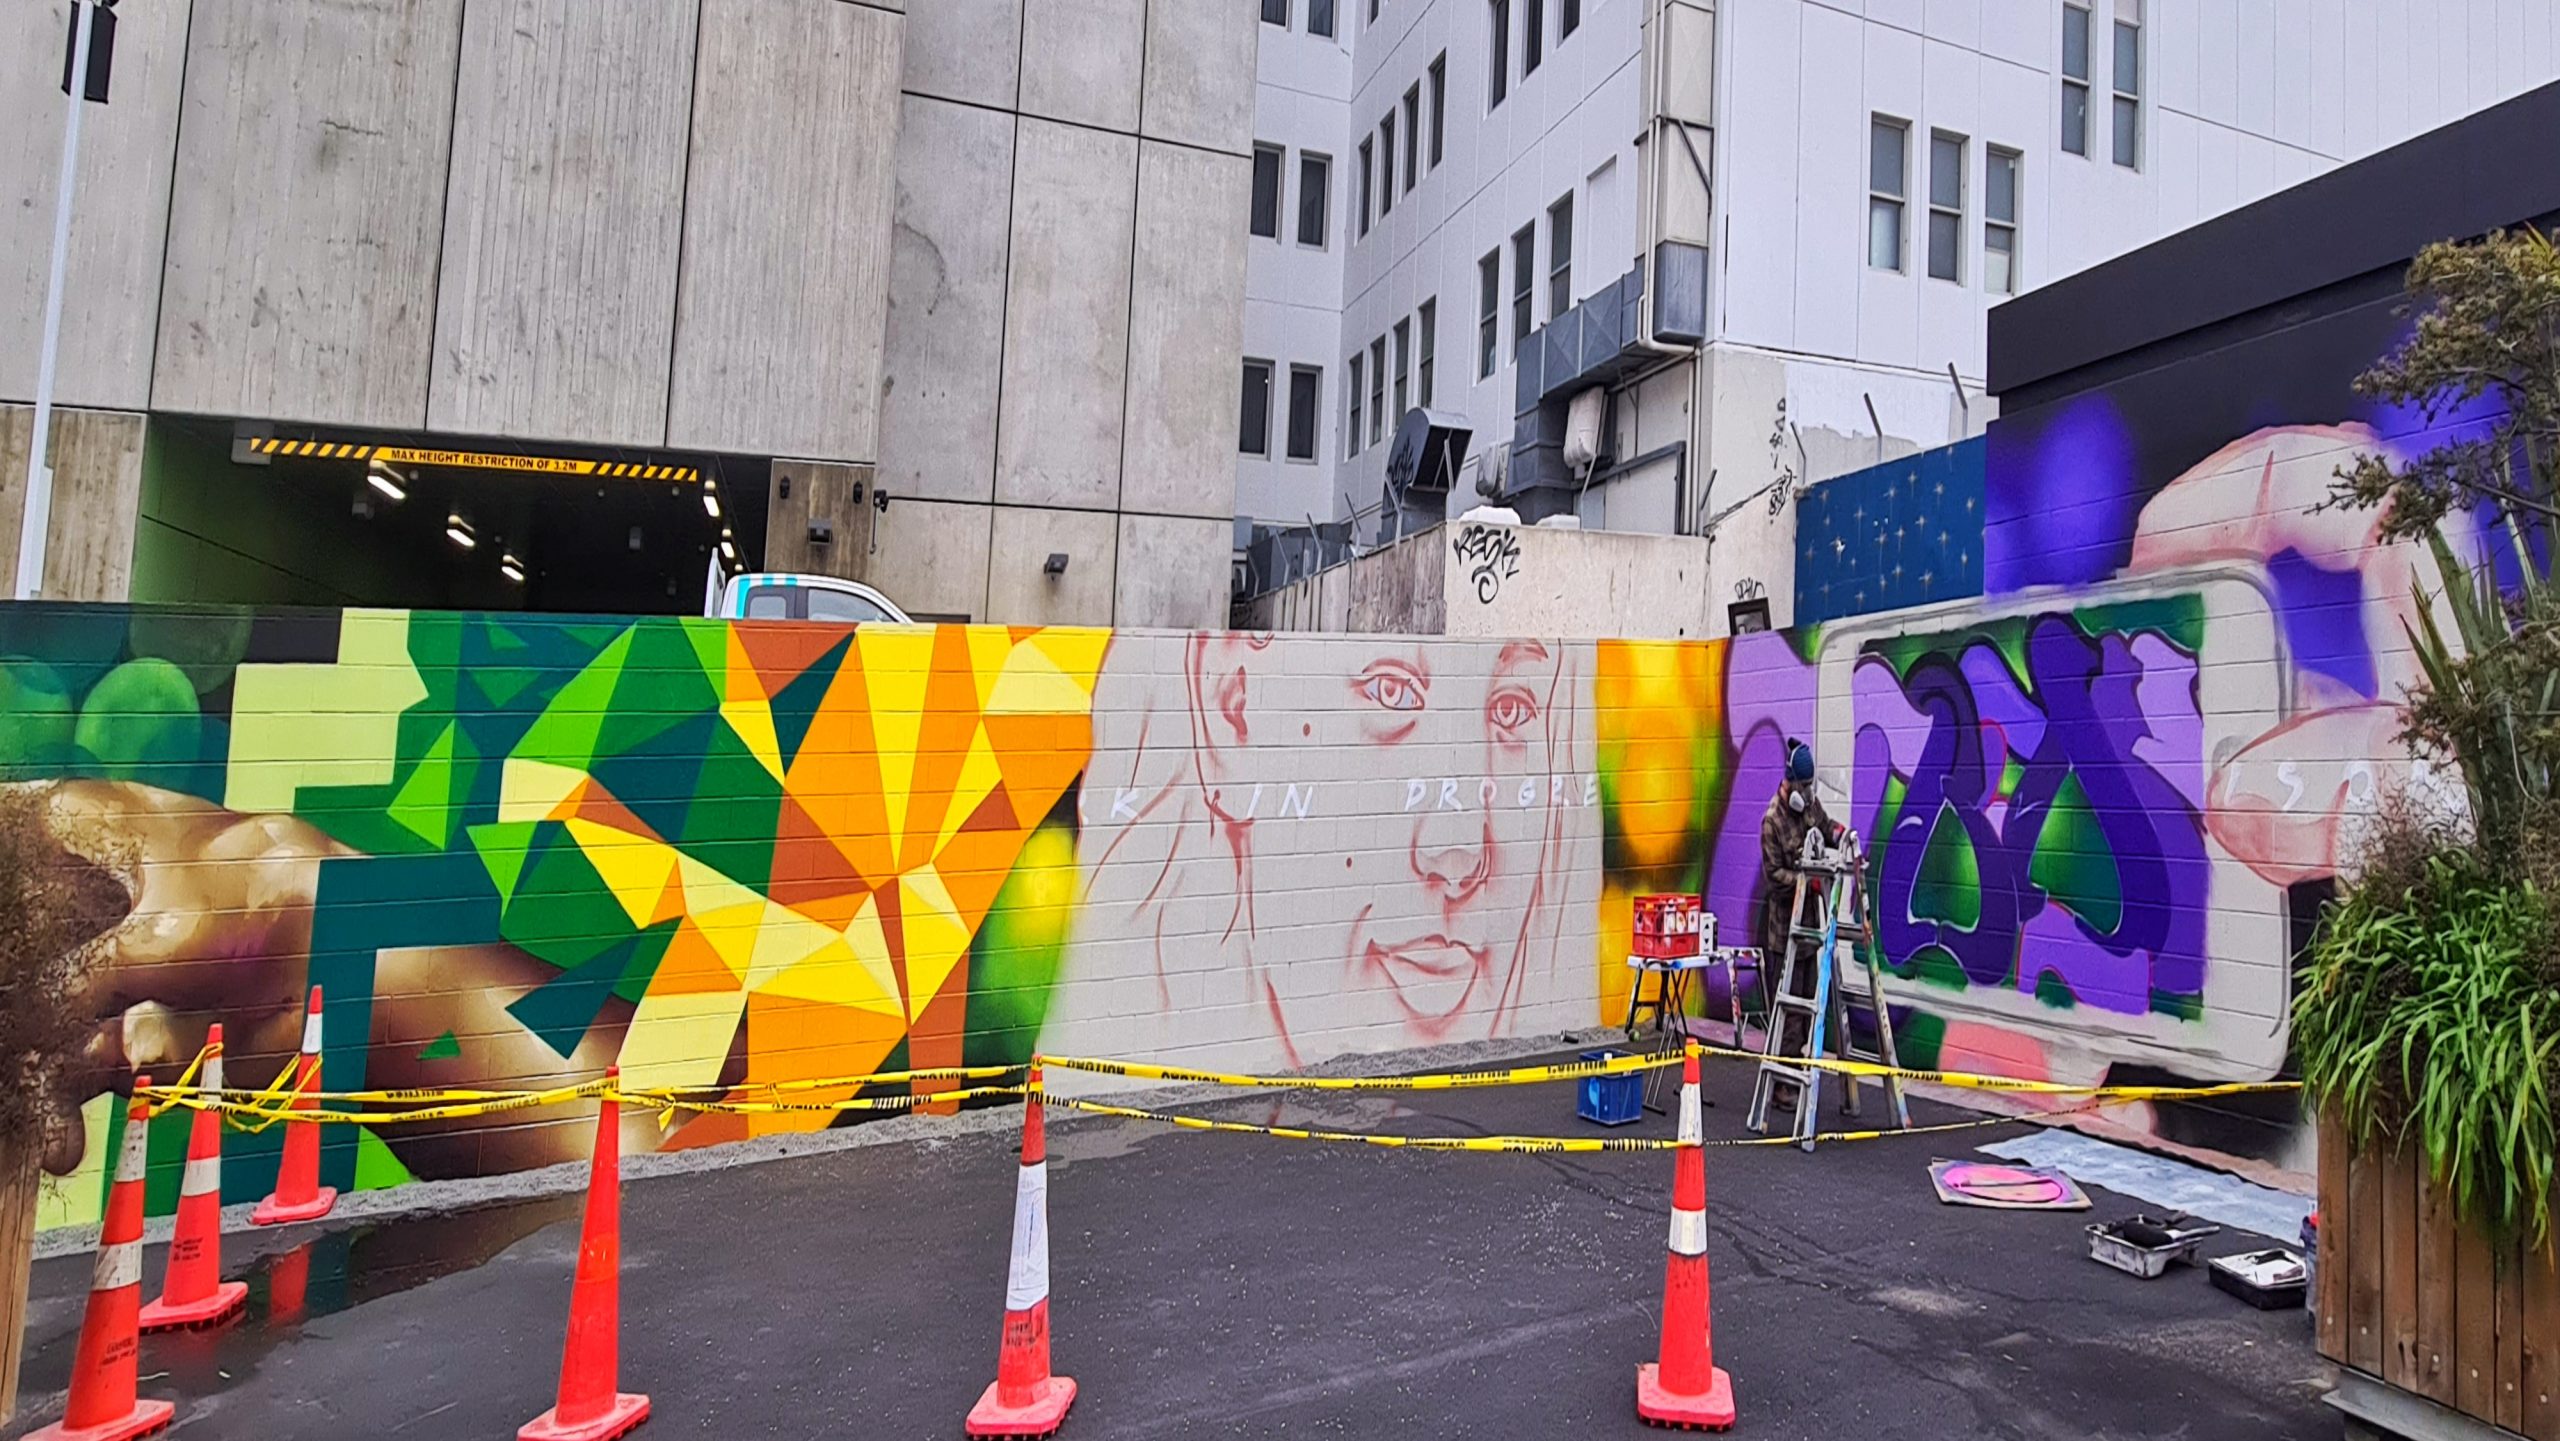 Christchurch kids design ways to make Aranui streets safer